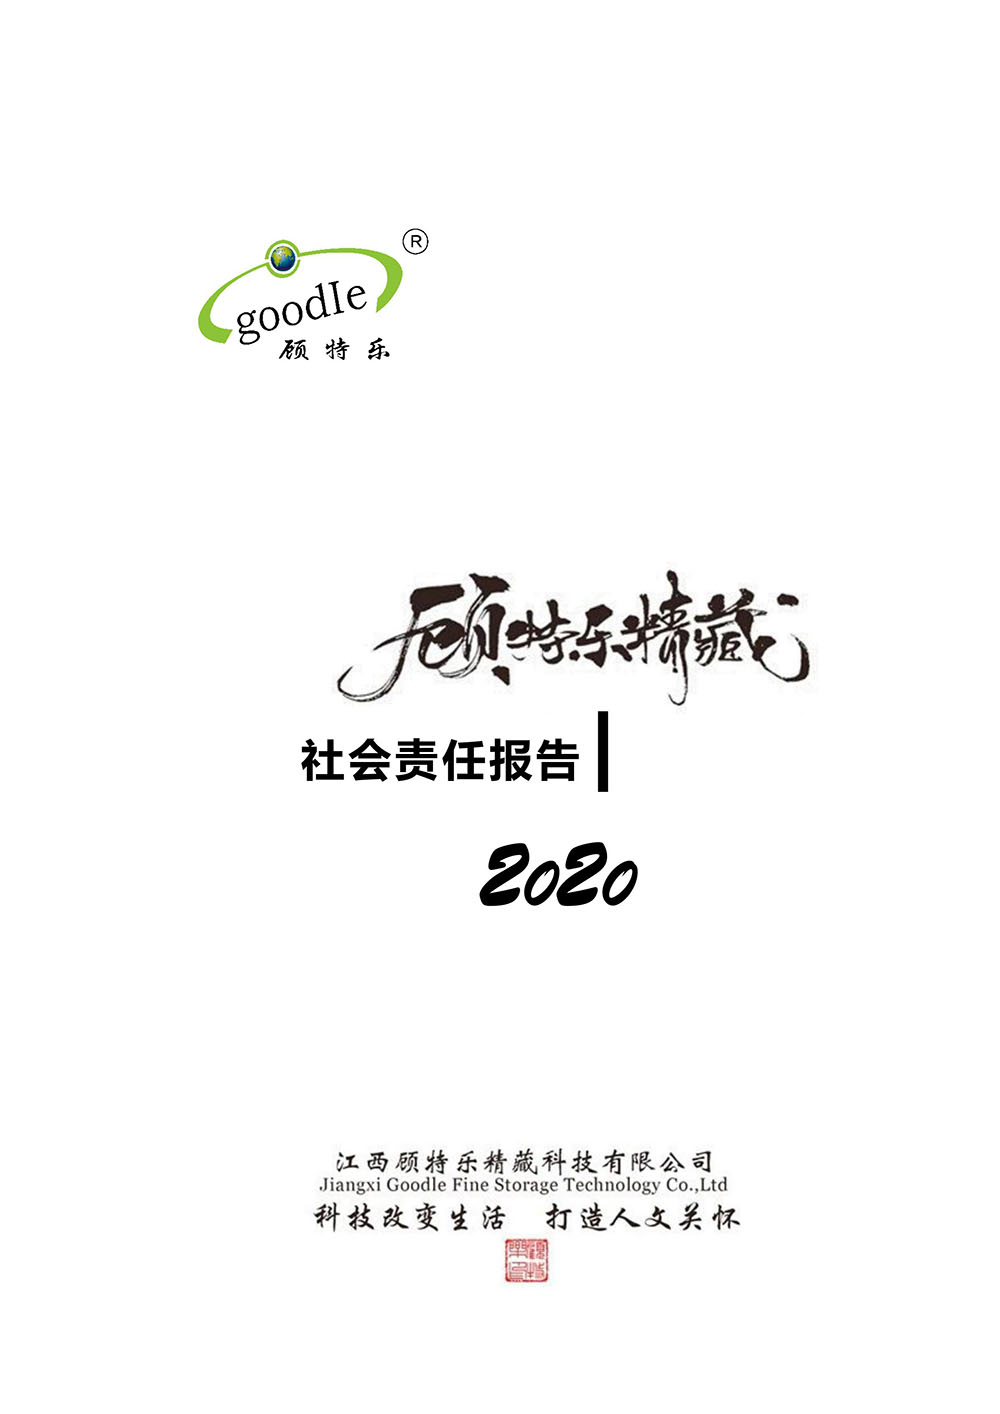 Jiangxi Goodle fine storage technology Co.,Ltd. social responsibility Report